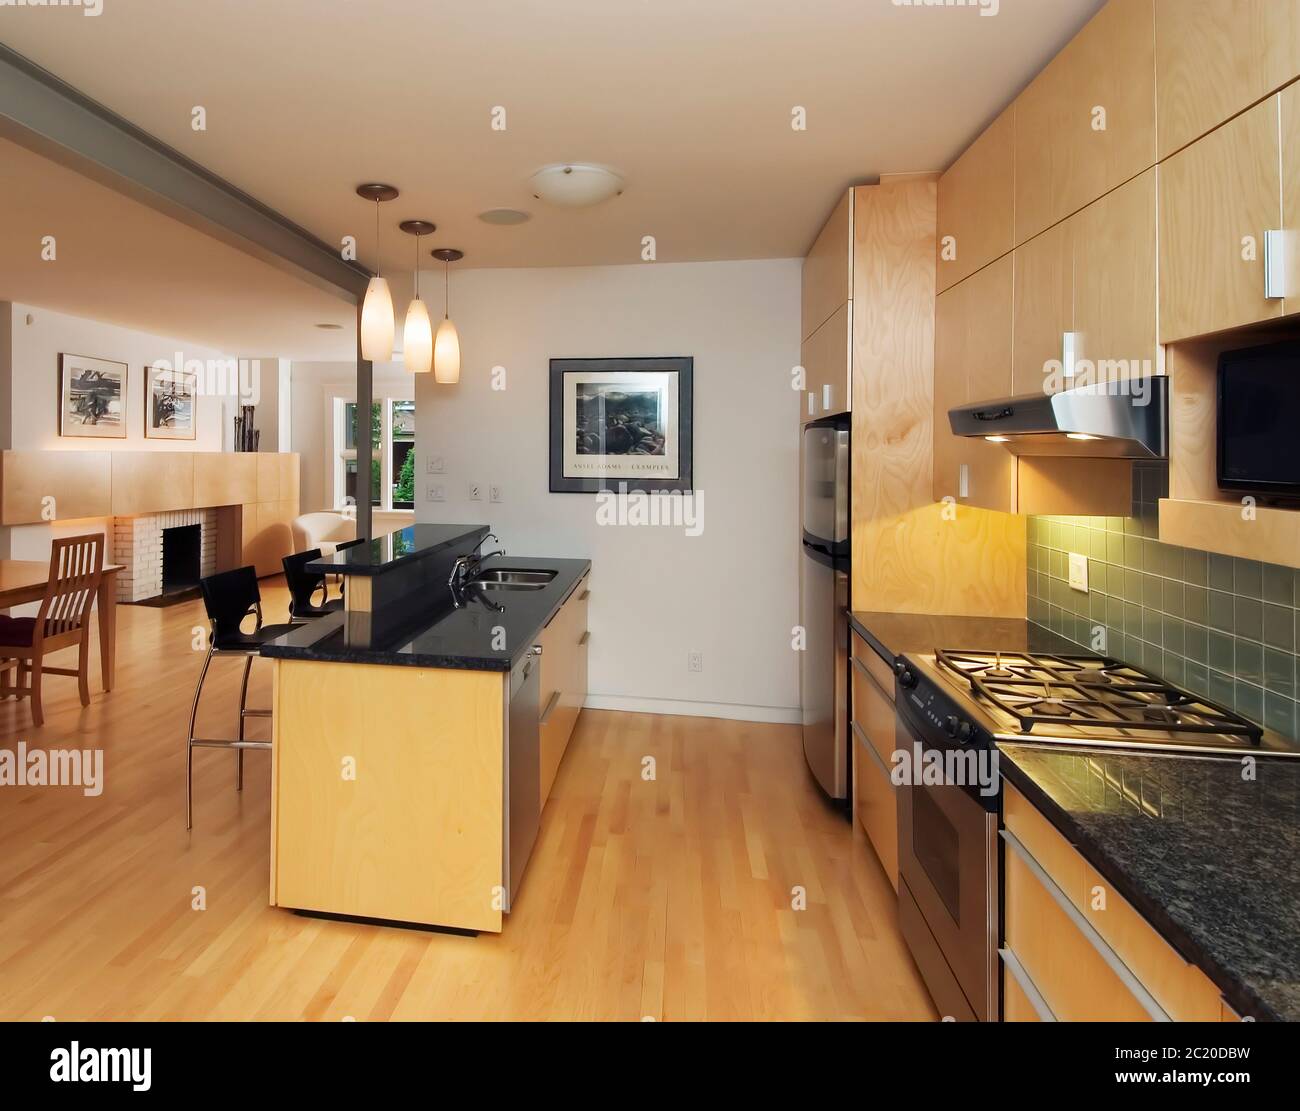 High End Kitchen Renovation With Modern Appliances Stock Photo Alamy